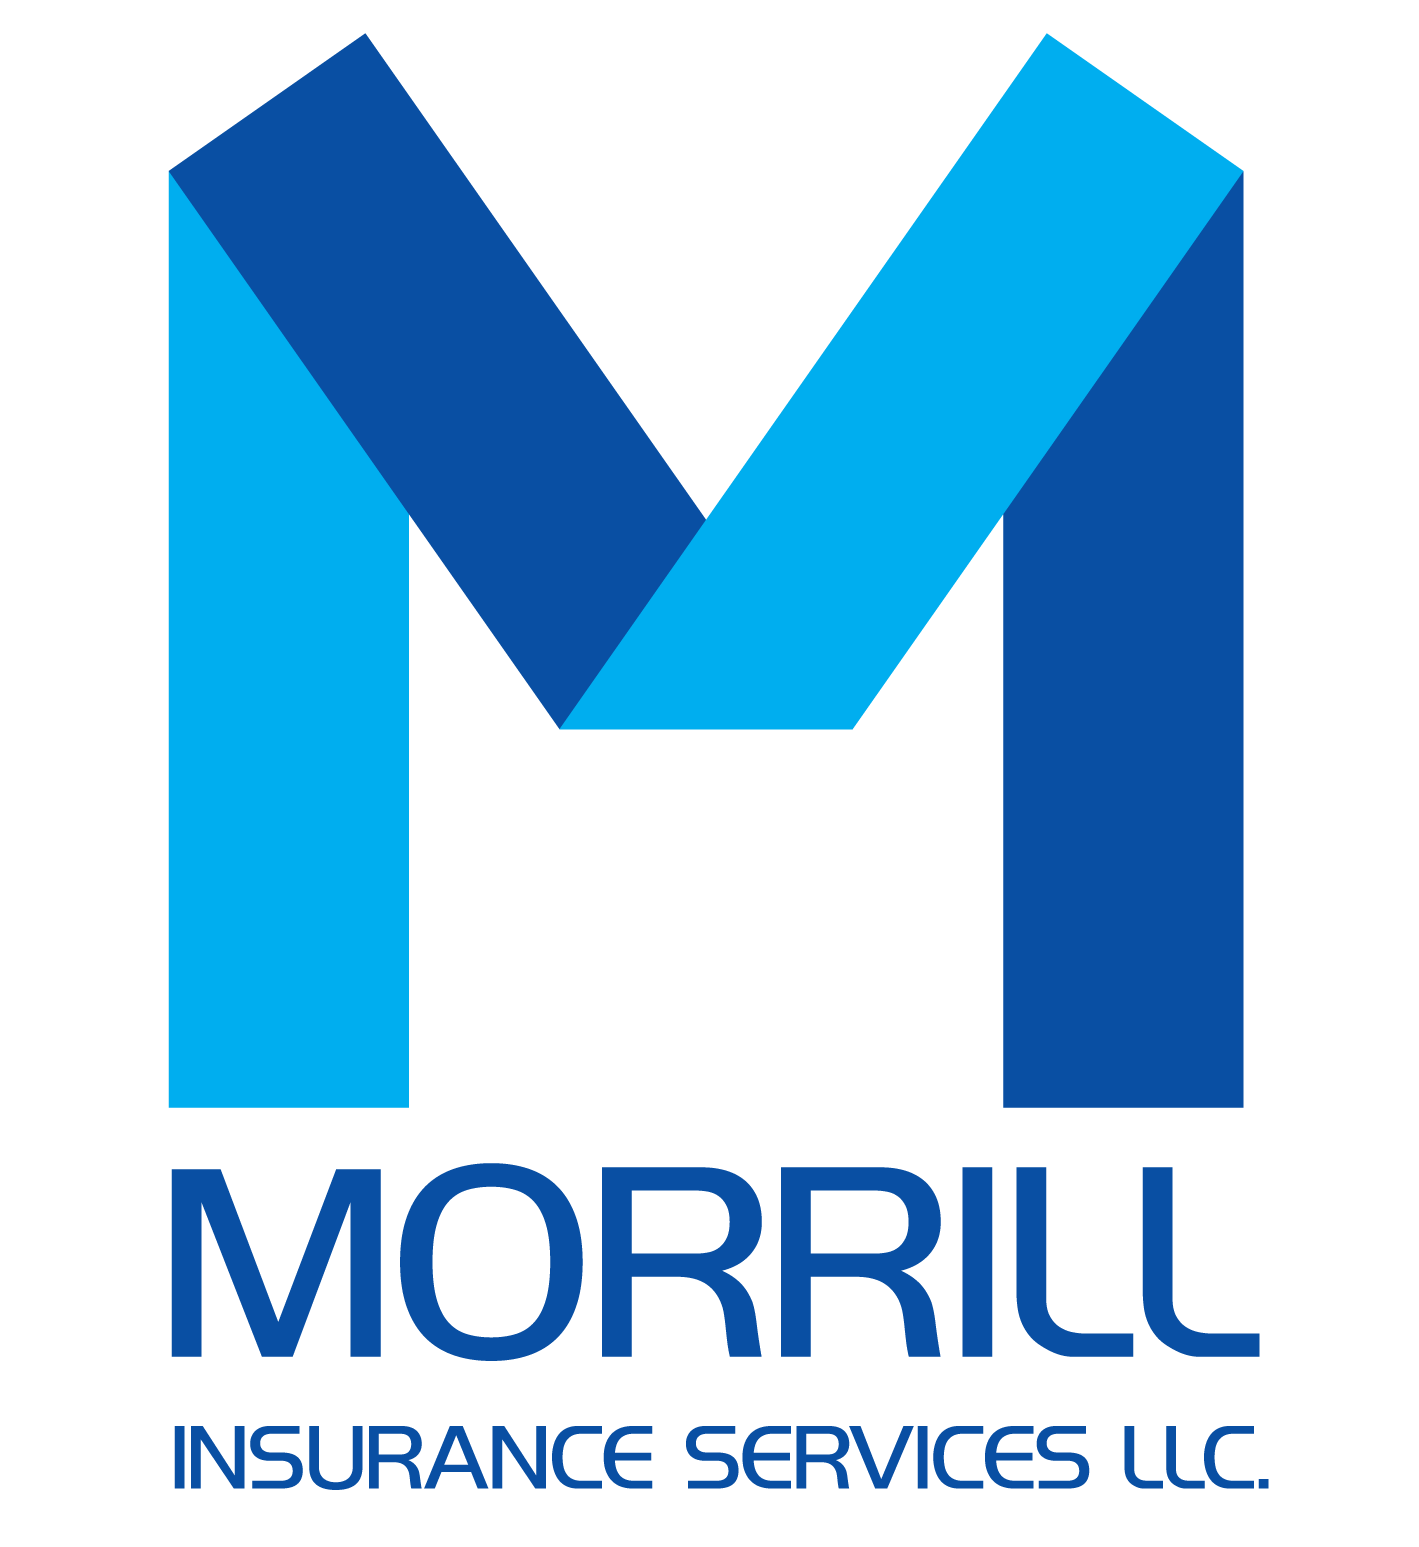 Morrill Insurance Services LLC